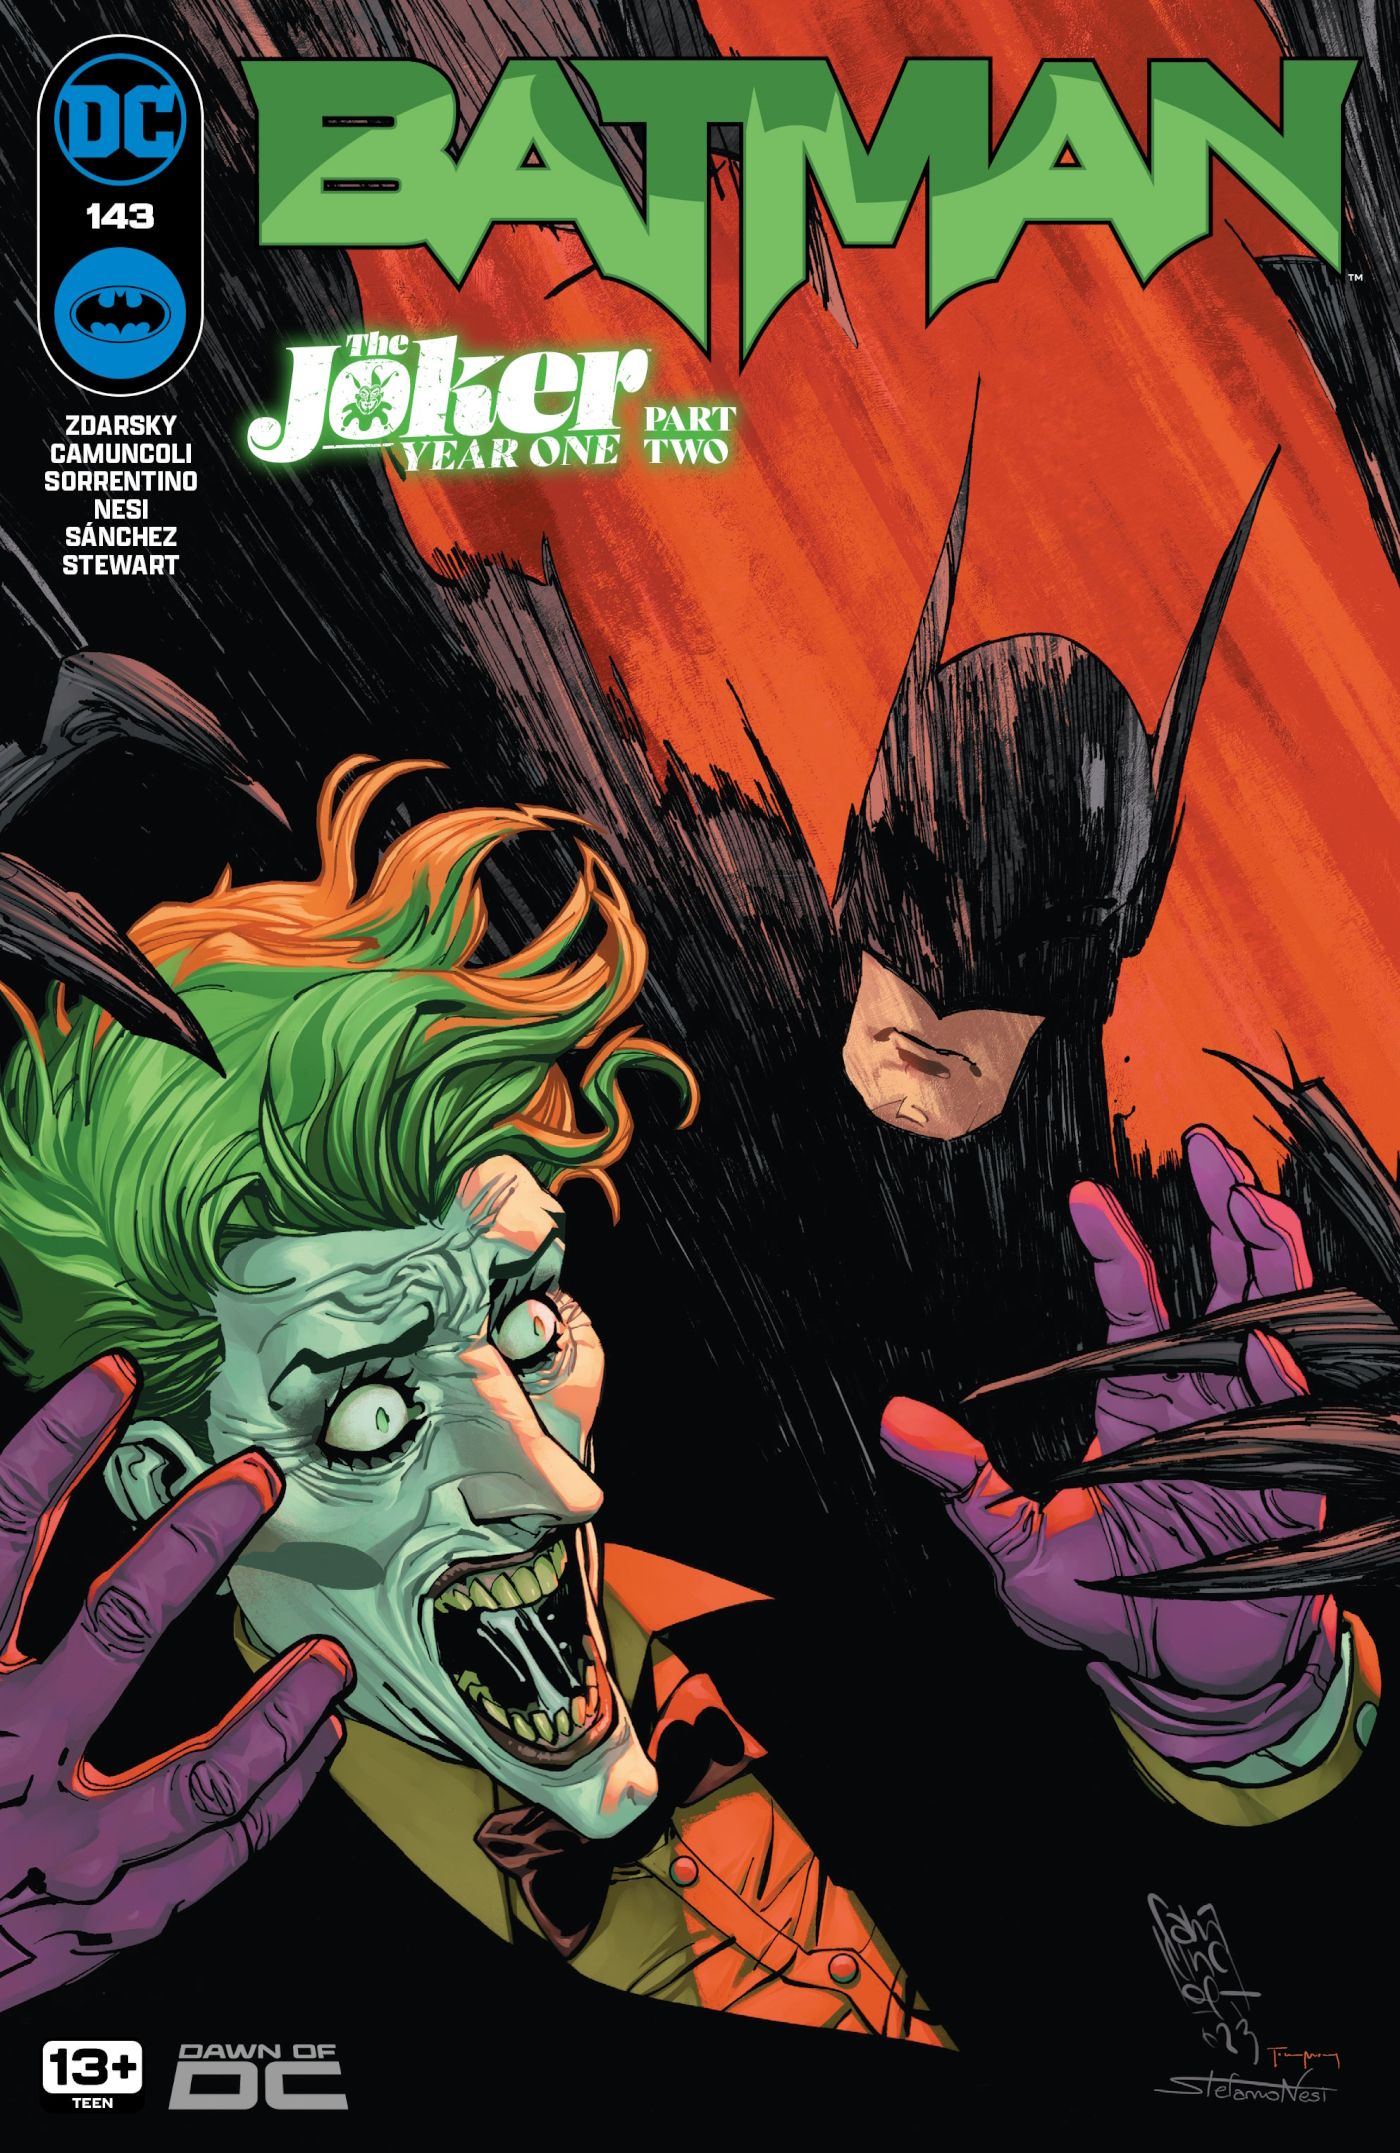 Batman 143 Main Cover: the Joker looking scared as Batman attacks him.